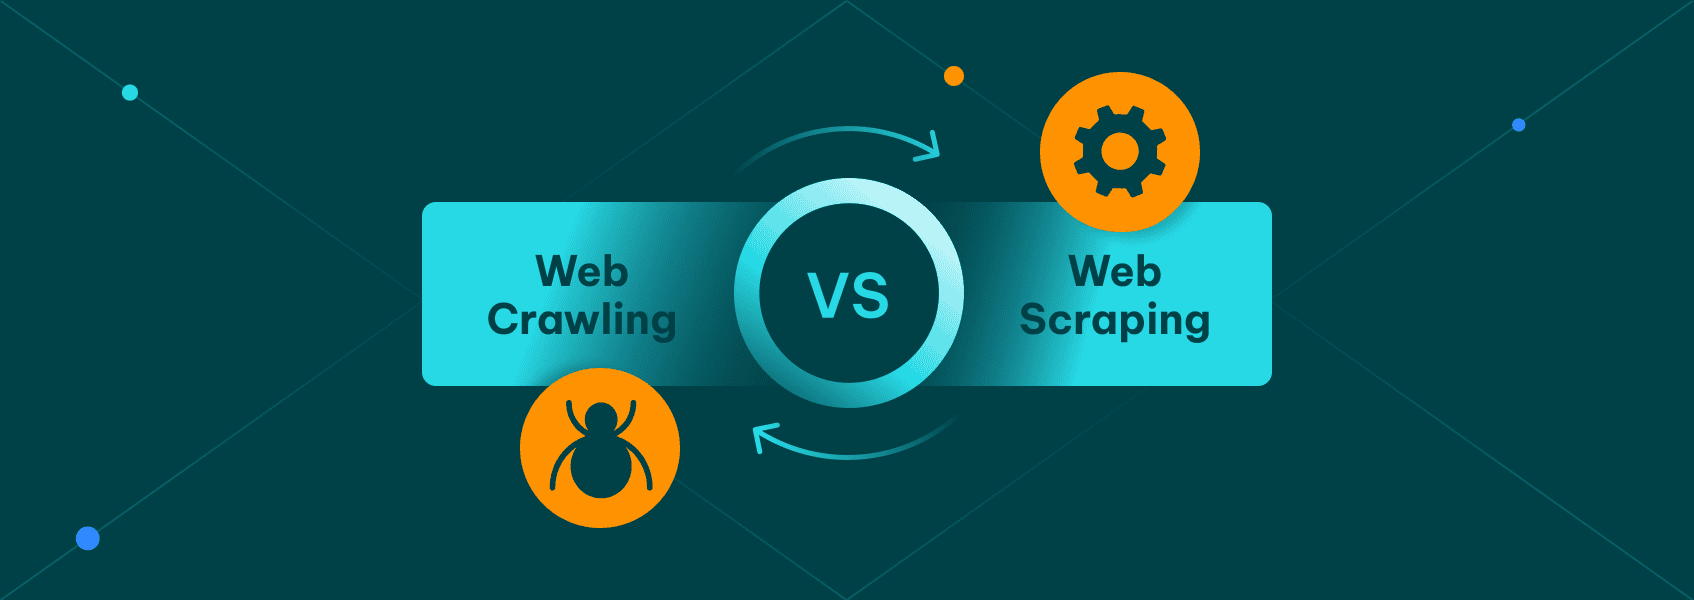 Web Crawling Vs. Web Scraping